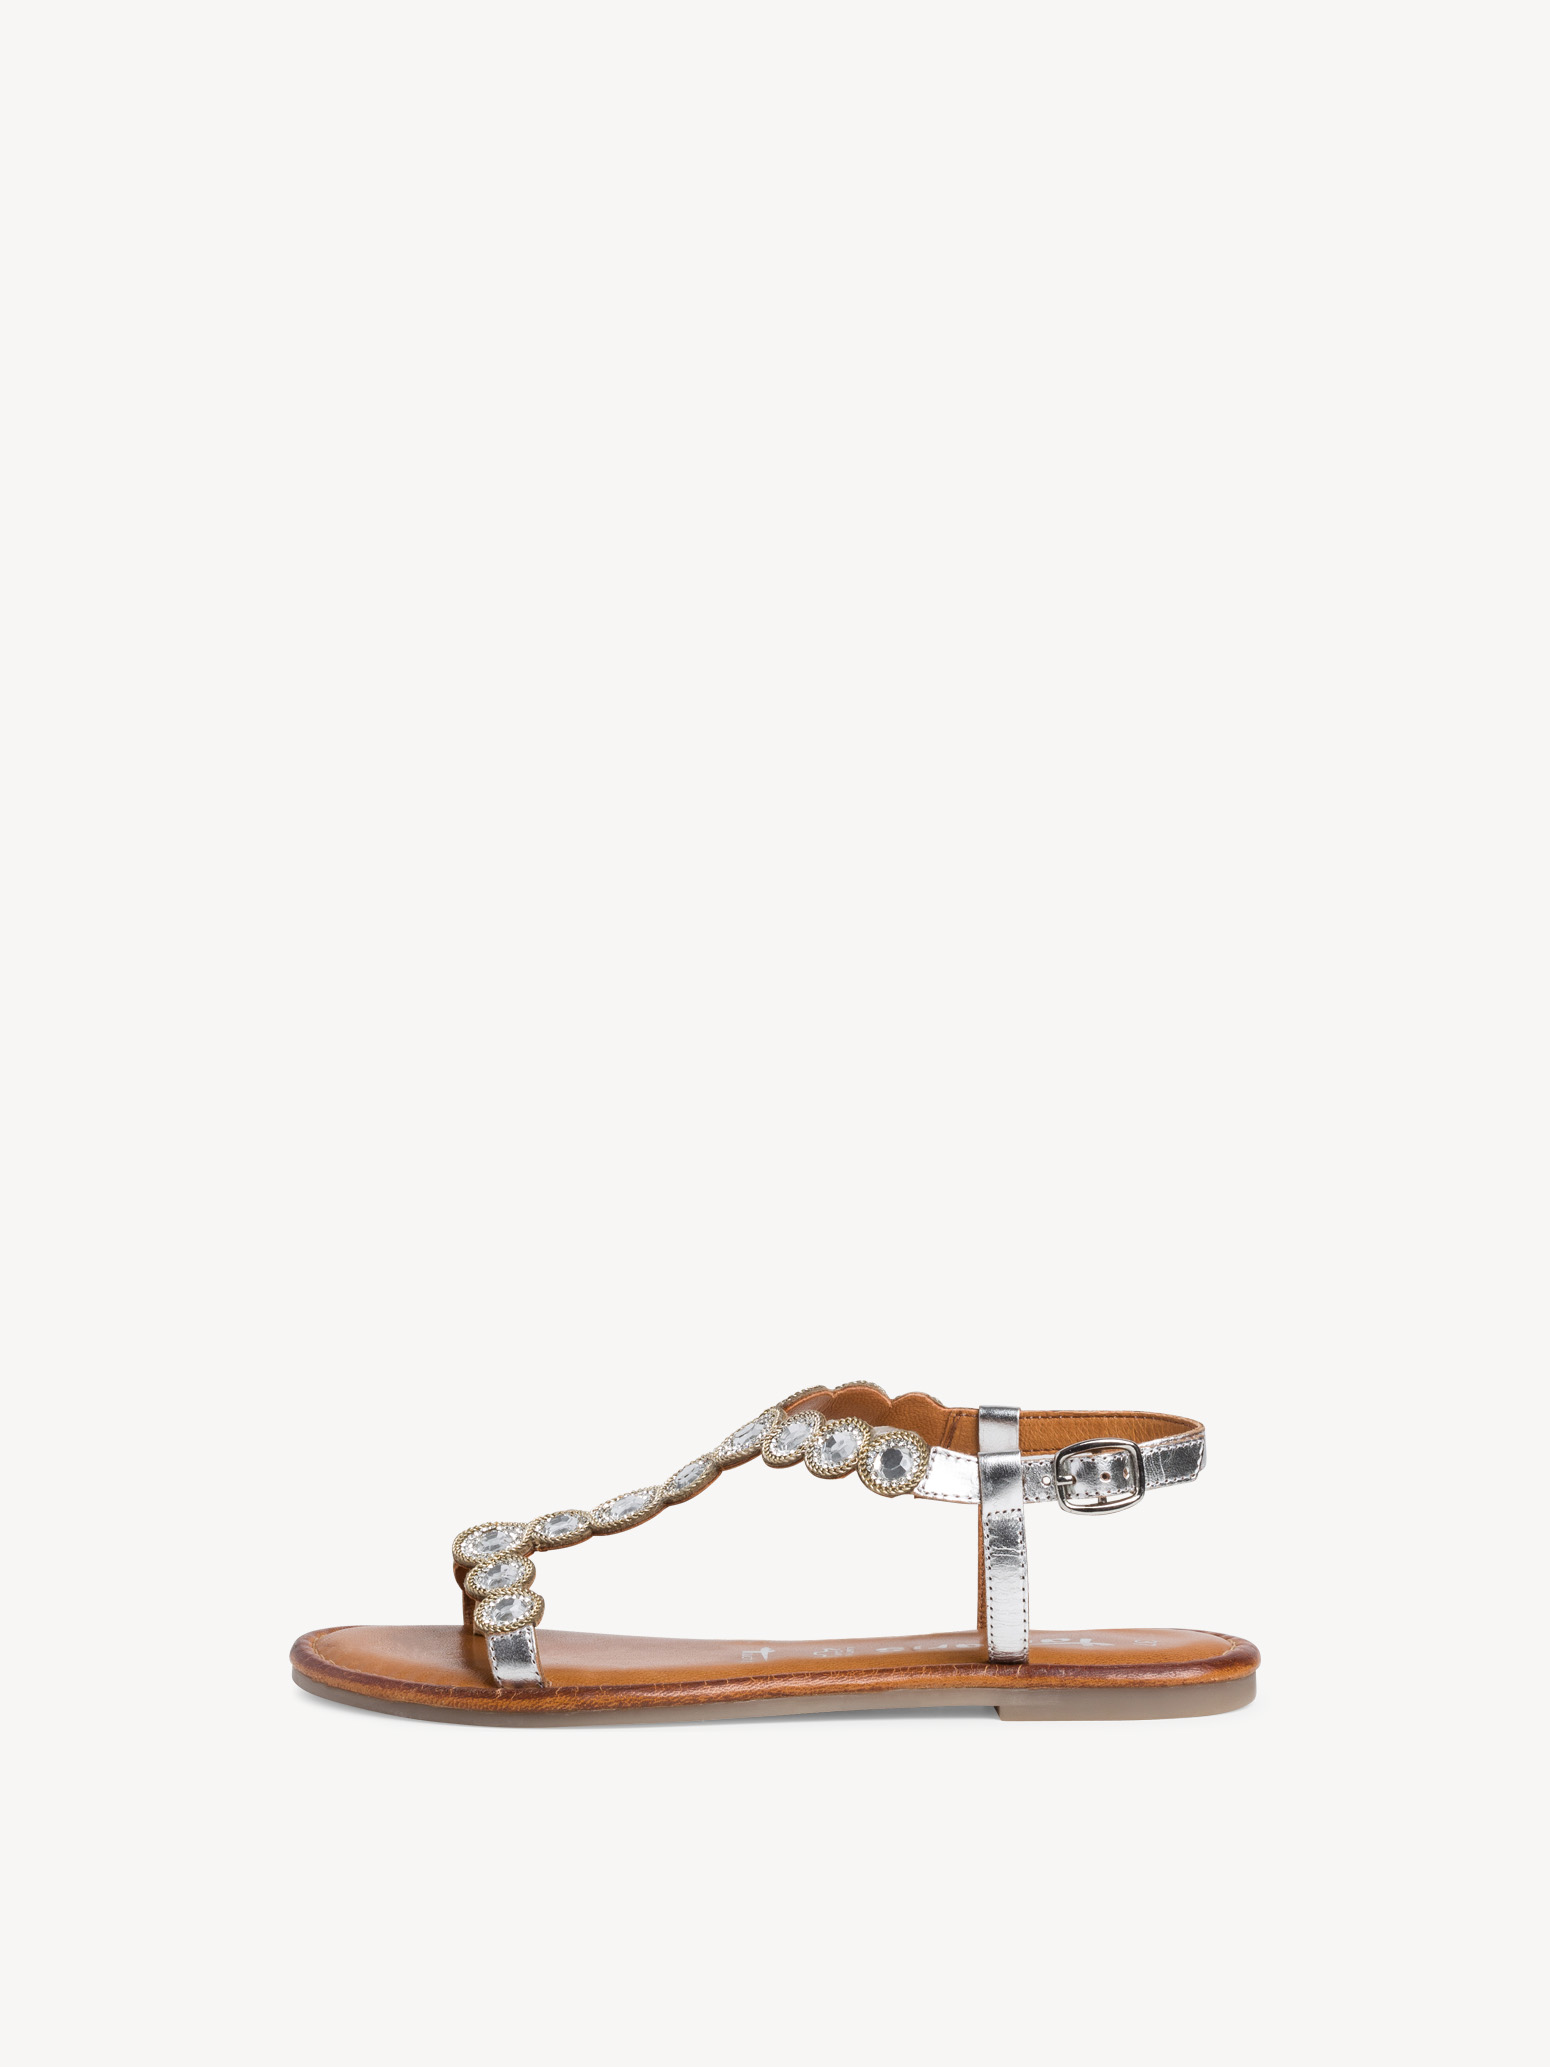 Leather Sandal 1-1-28127-26: Buy Tamaris Sandals online!